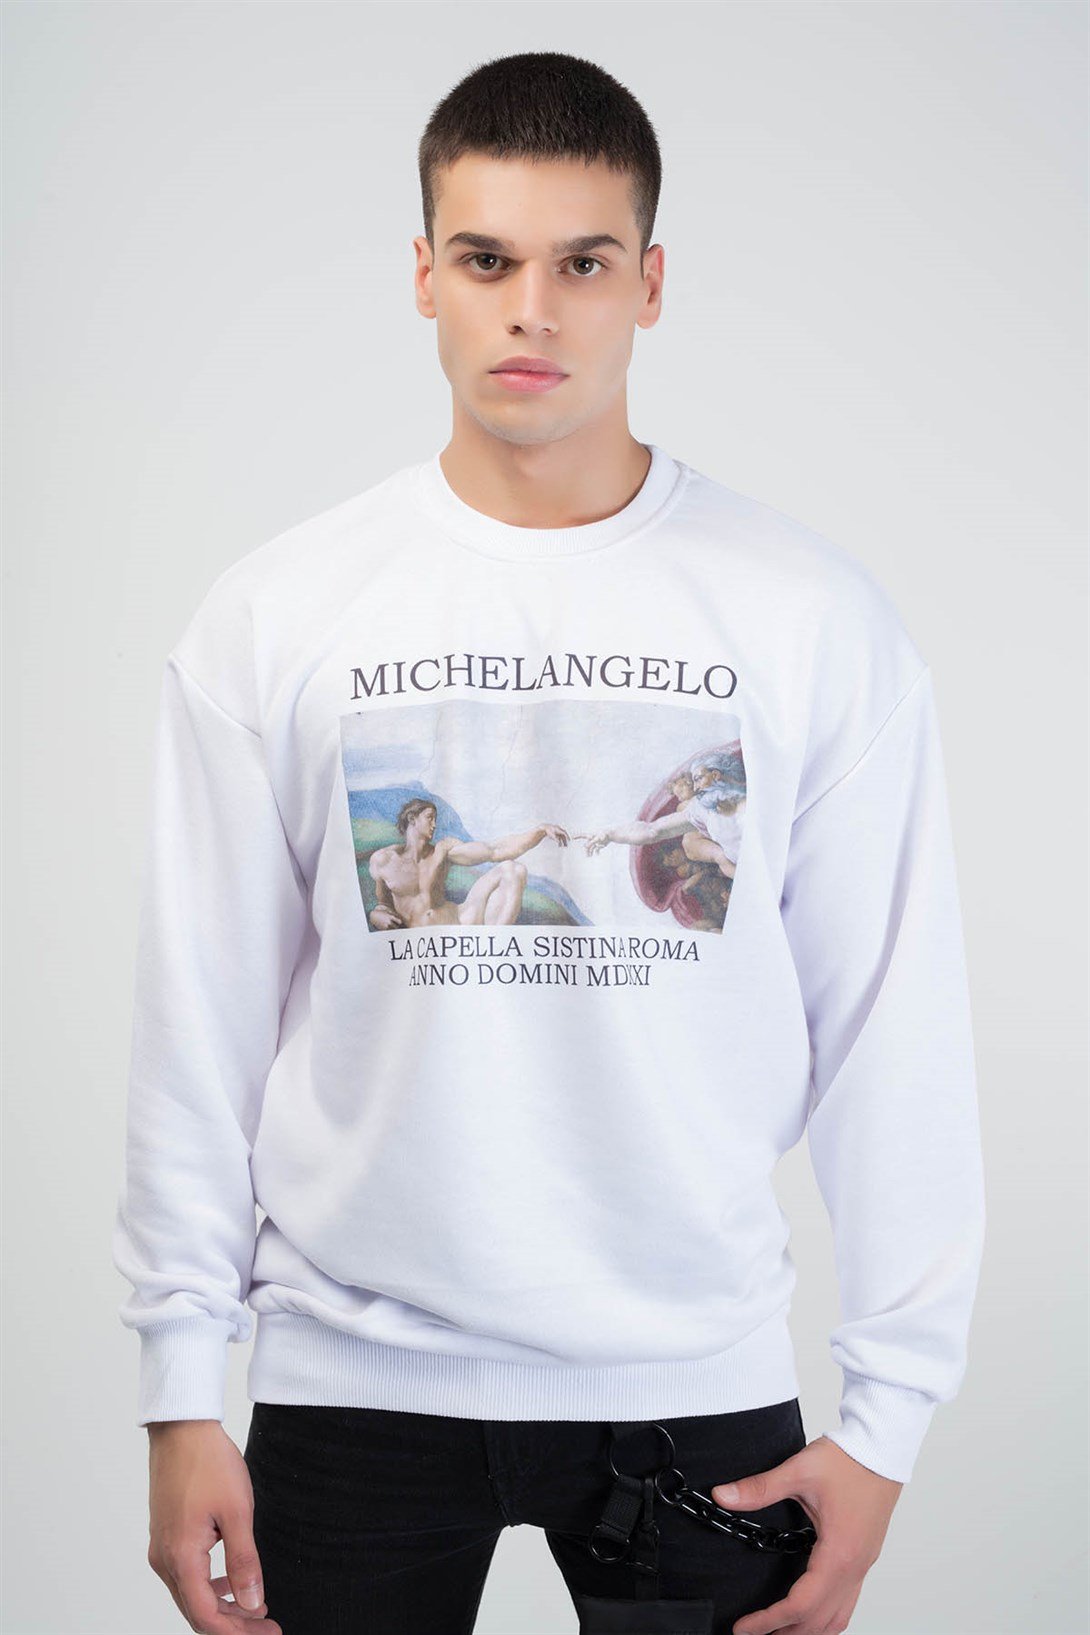 Trendiz Michelangelo Yuvarlak Yaka Sweatshirt Beyaz 111112